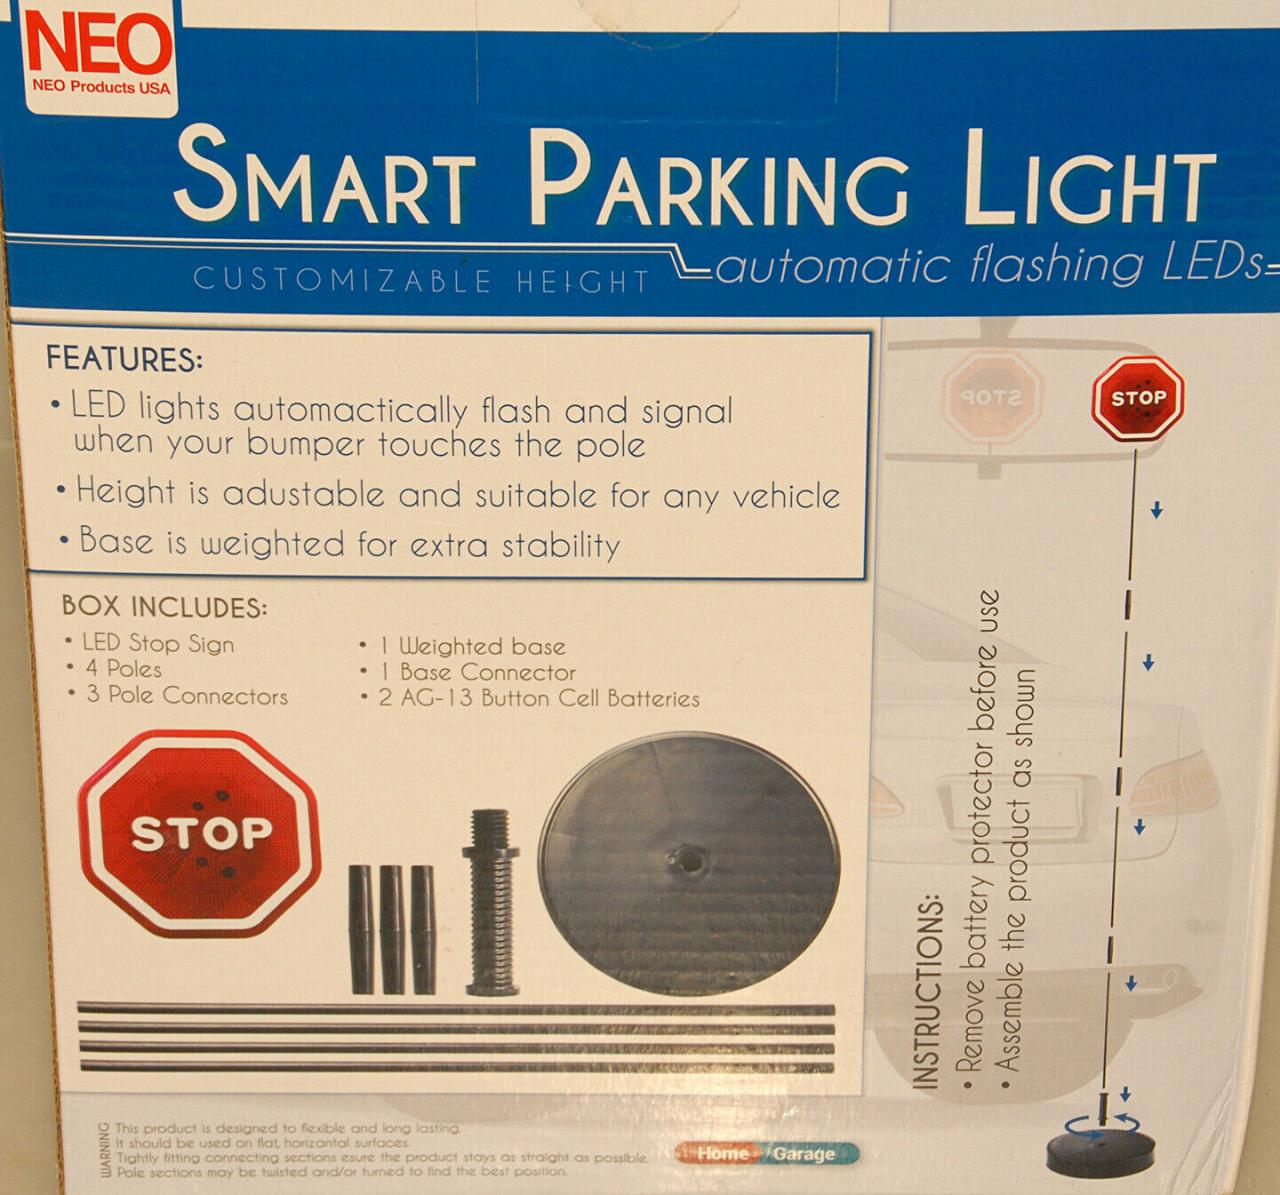 NEO Products - Smart Parking LED - tiendamia.com